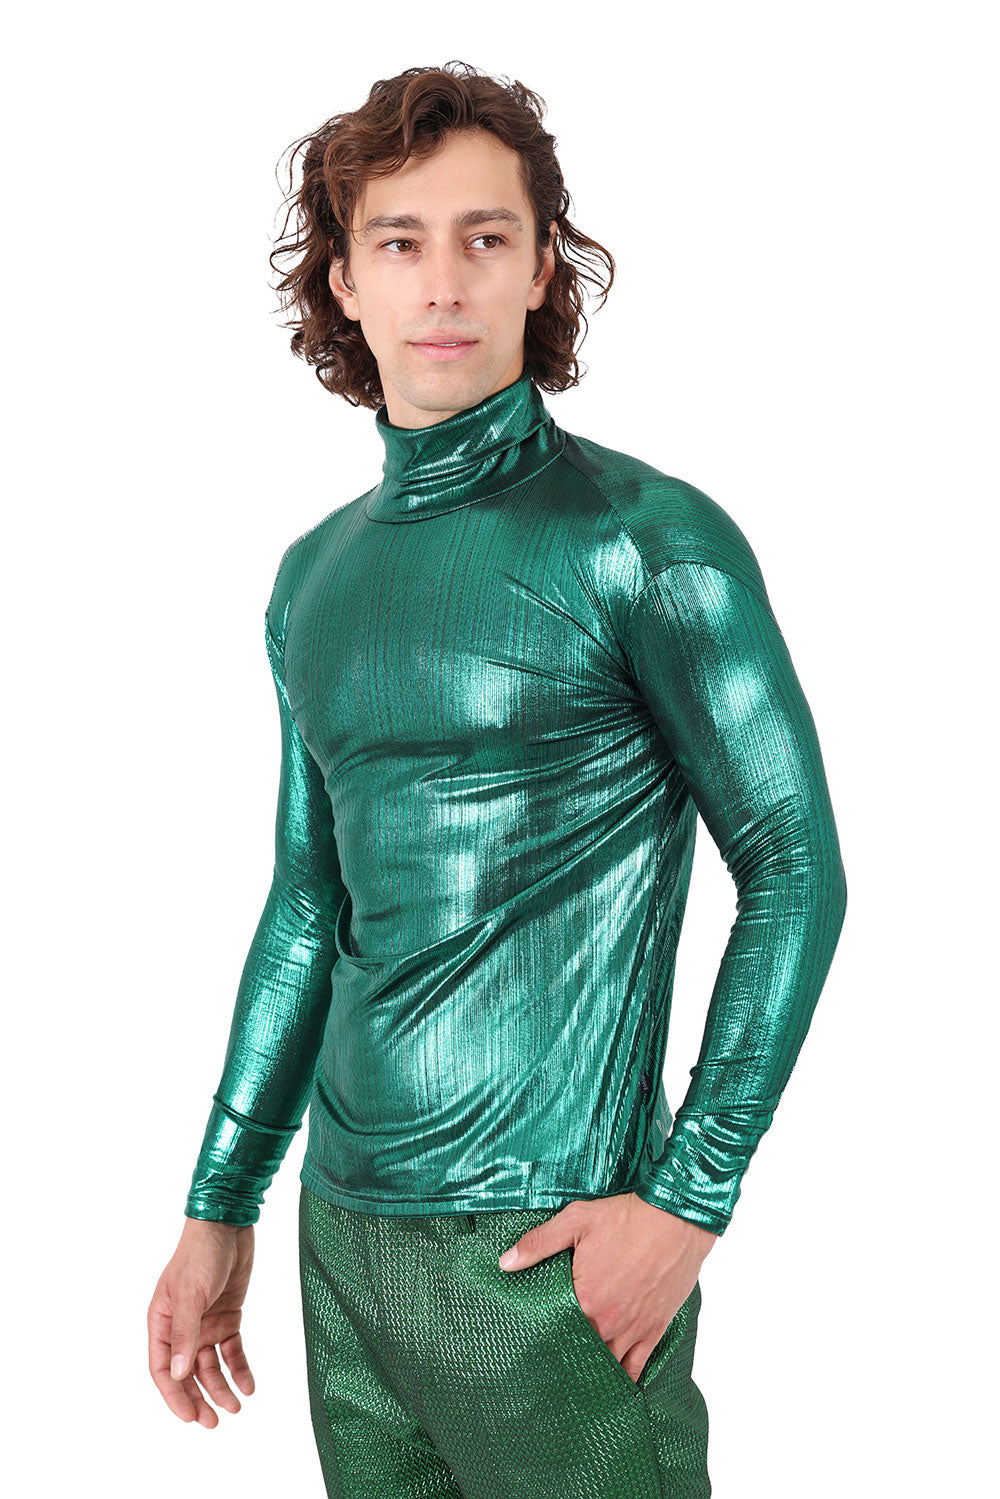 Barabas Wholesale Men's Metallic Design Long Sleeve Shirt 2KT1000 Emerald